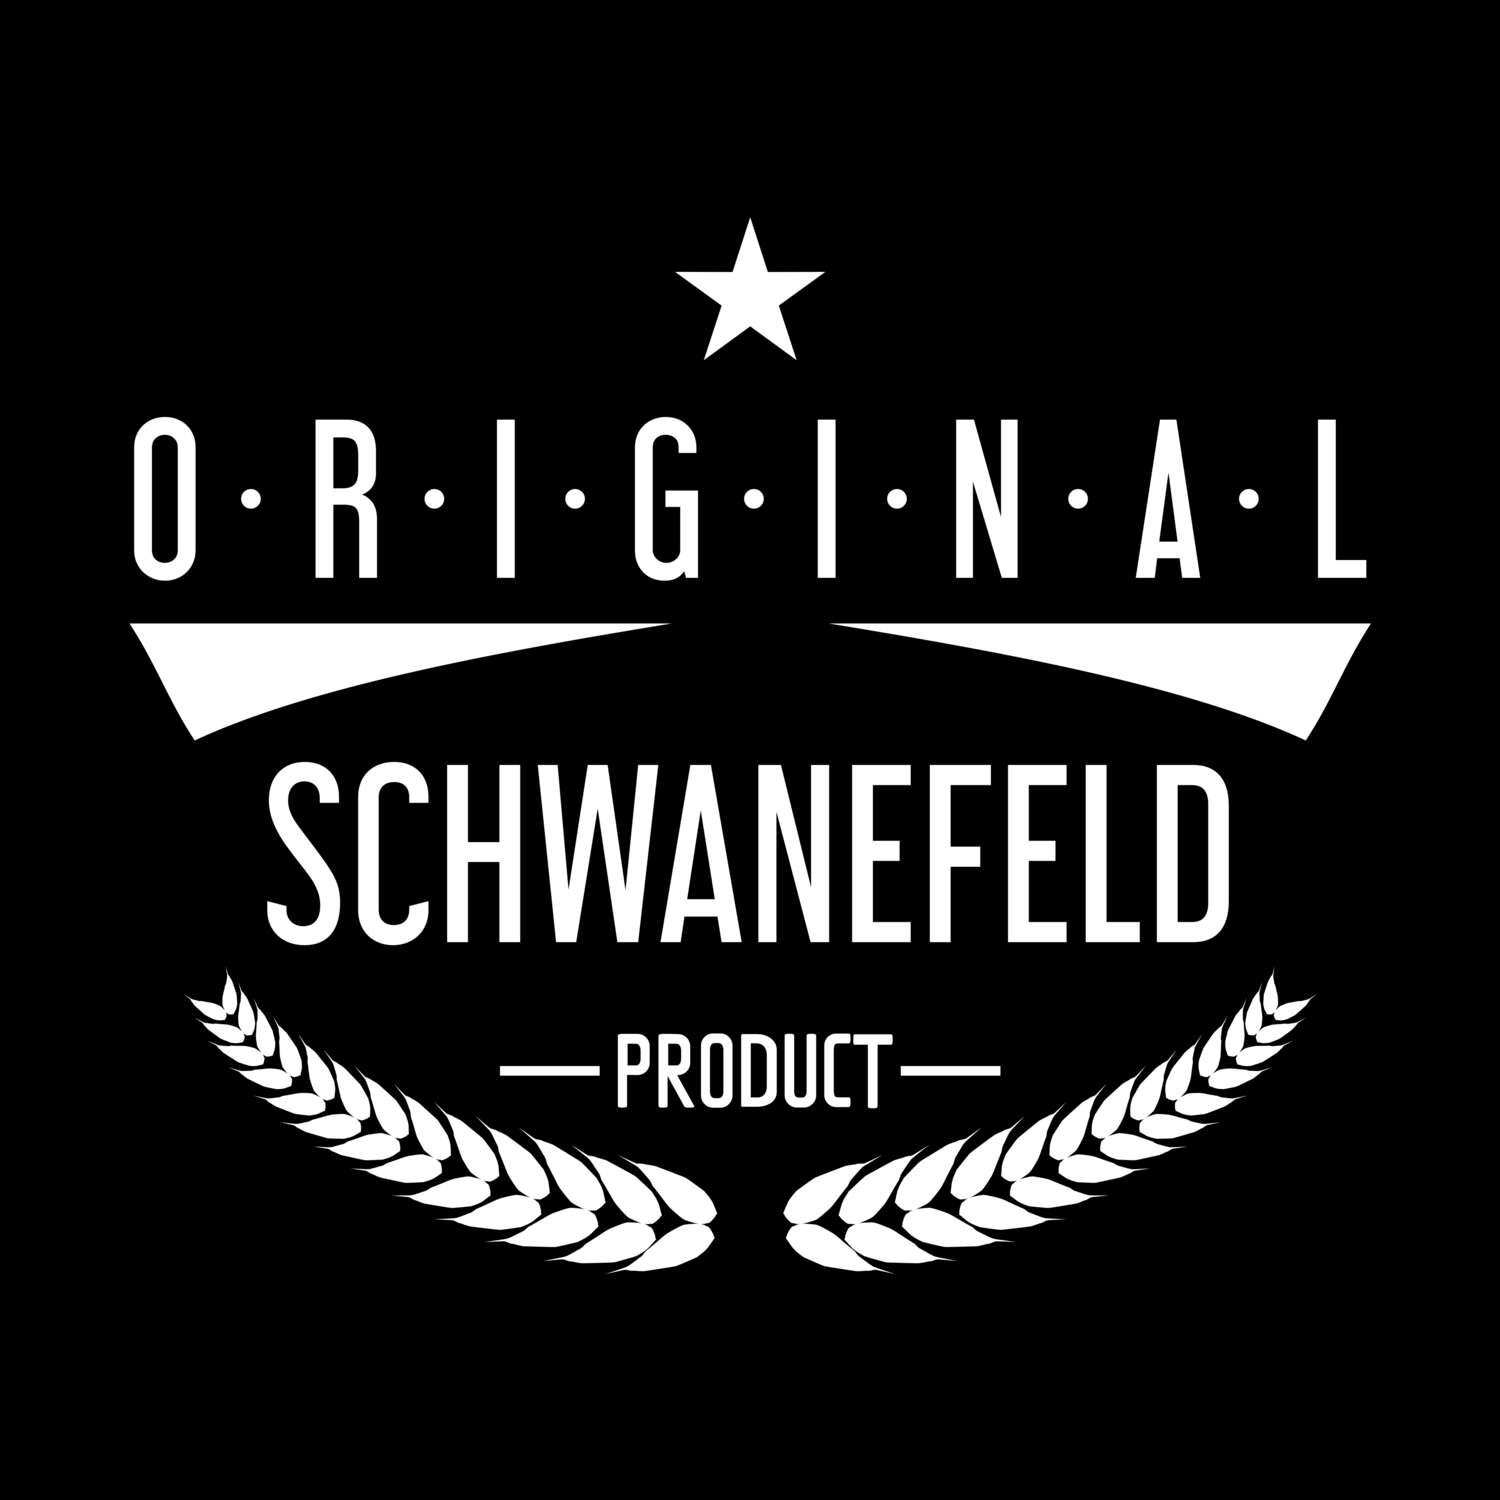 Schwanefeld T-Shirt »Original Product«